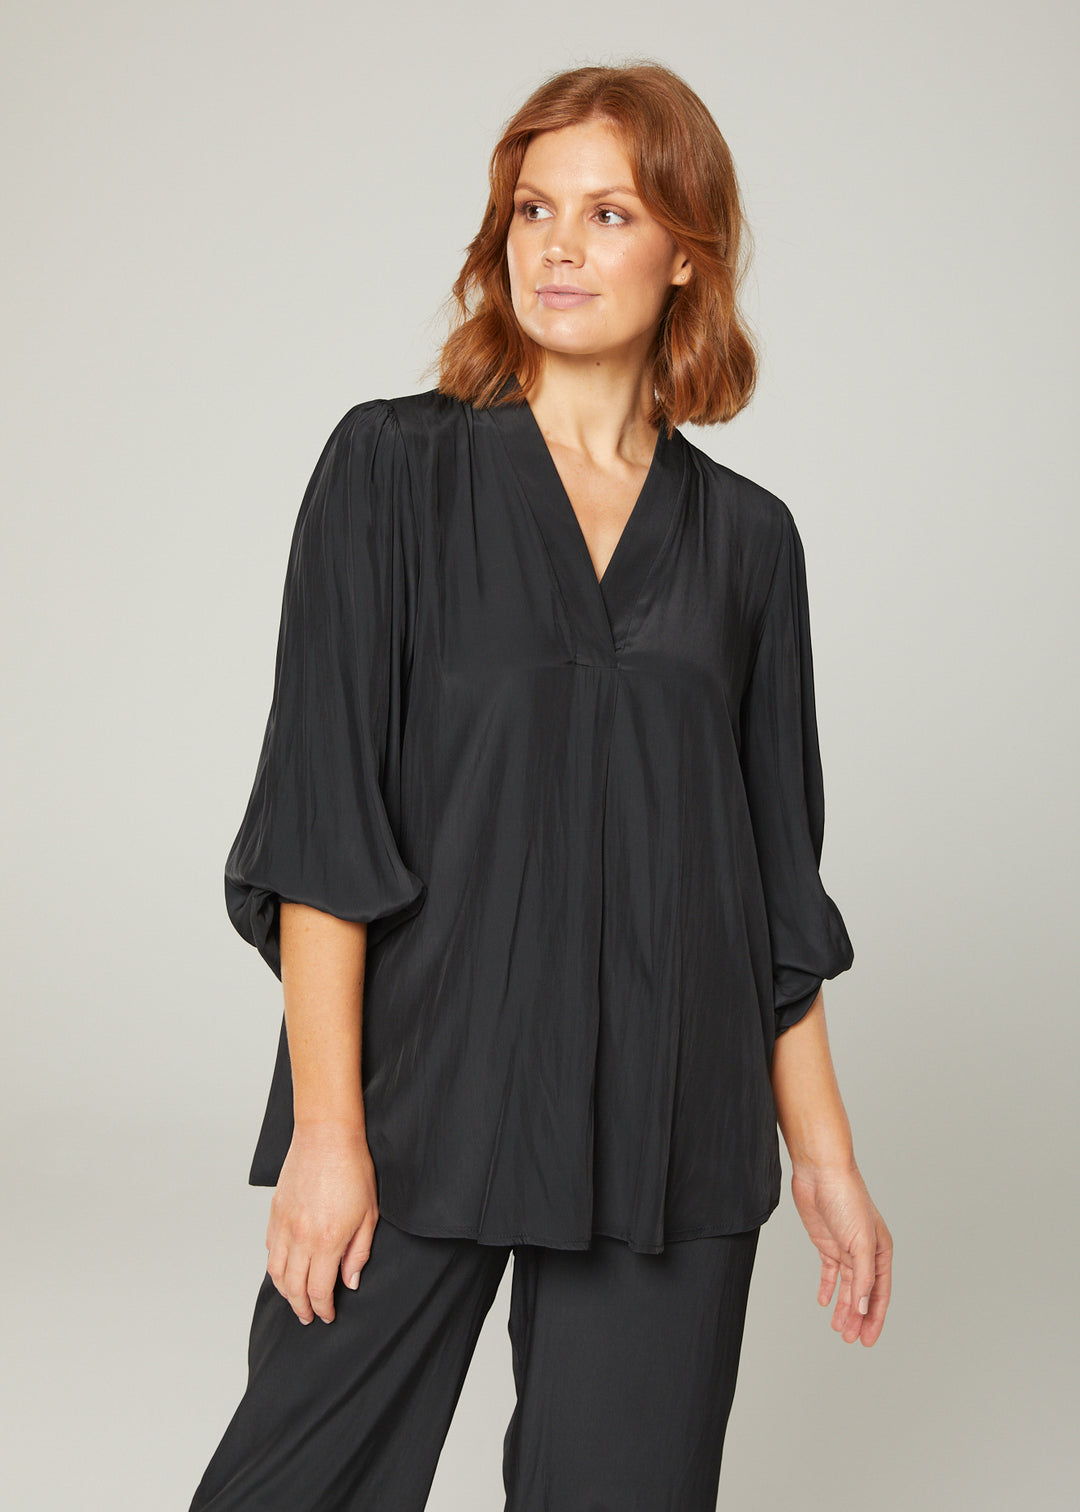 Maple Lustre billow blouse in Black